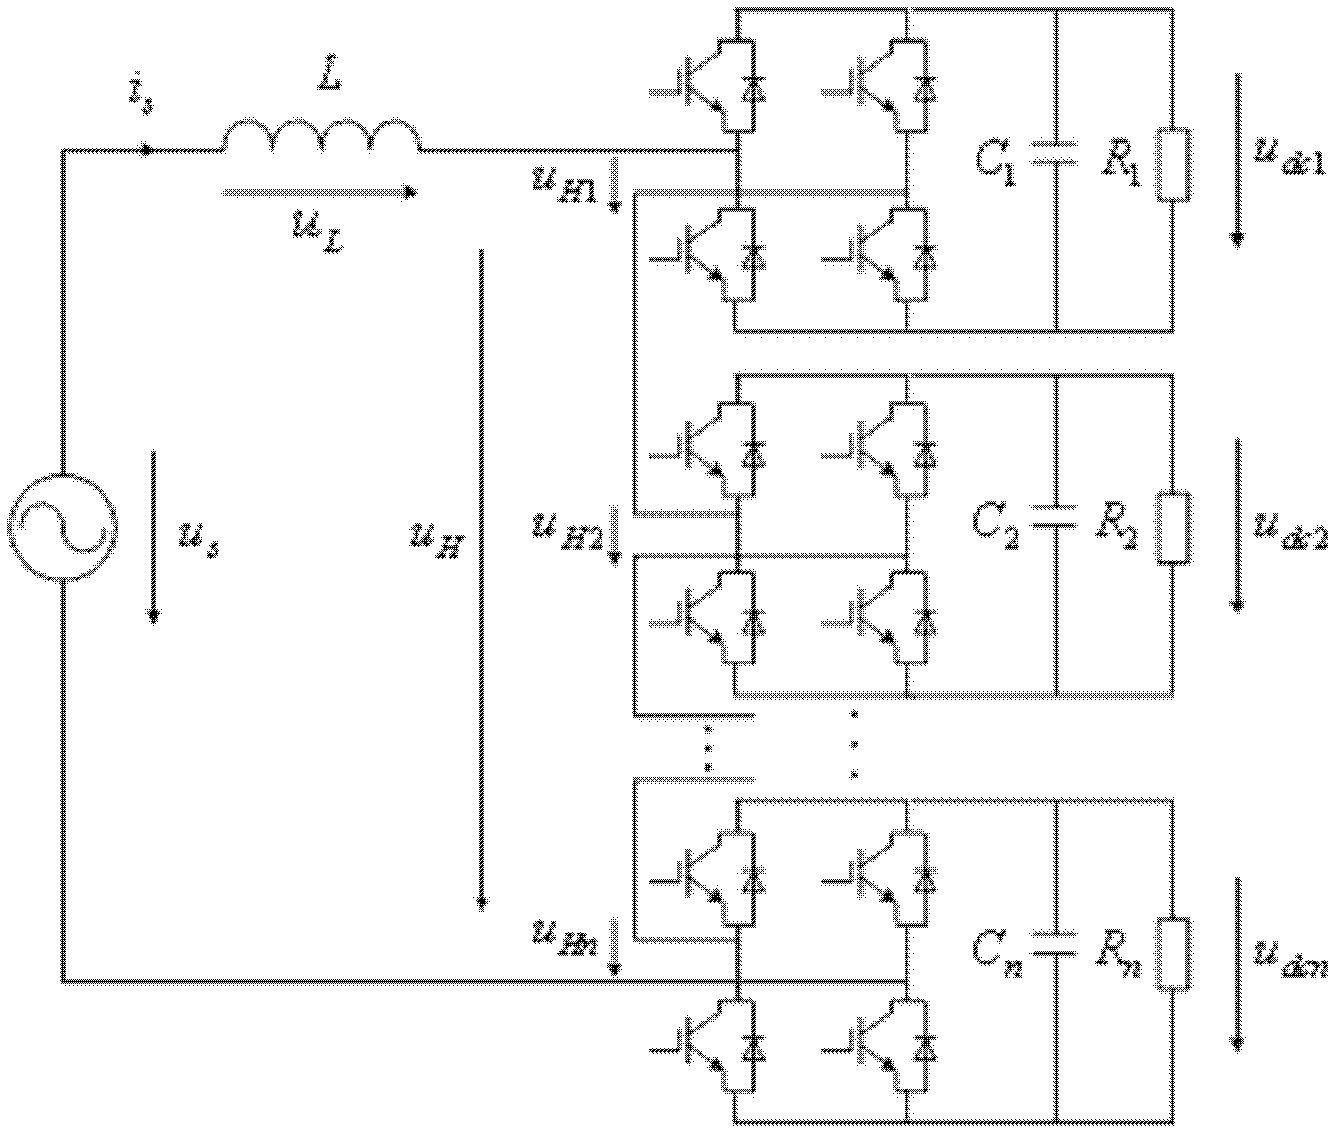 Voltage balance and power balance control method of cascaded H bridge converter